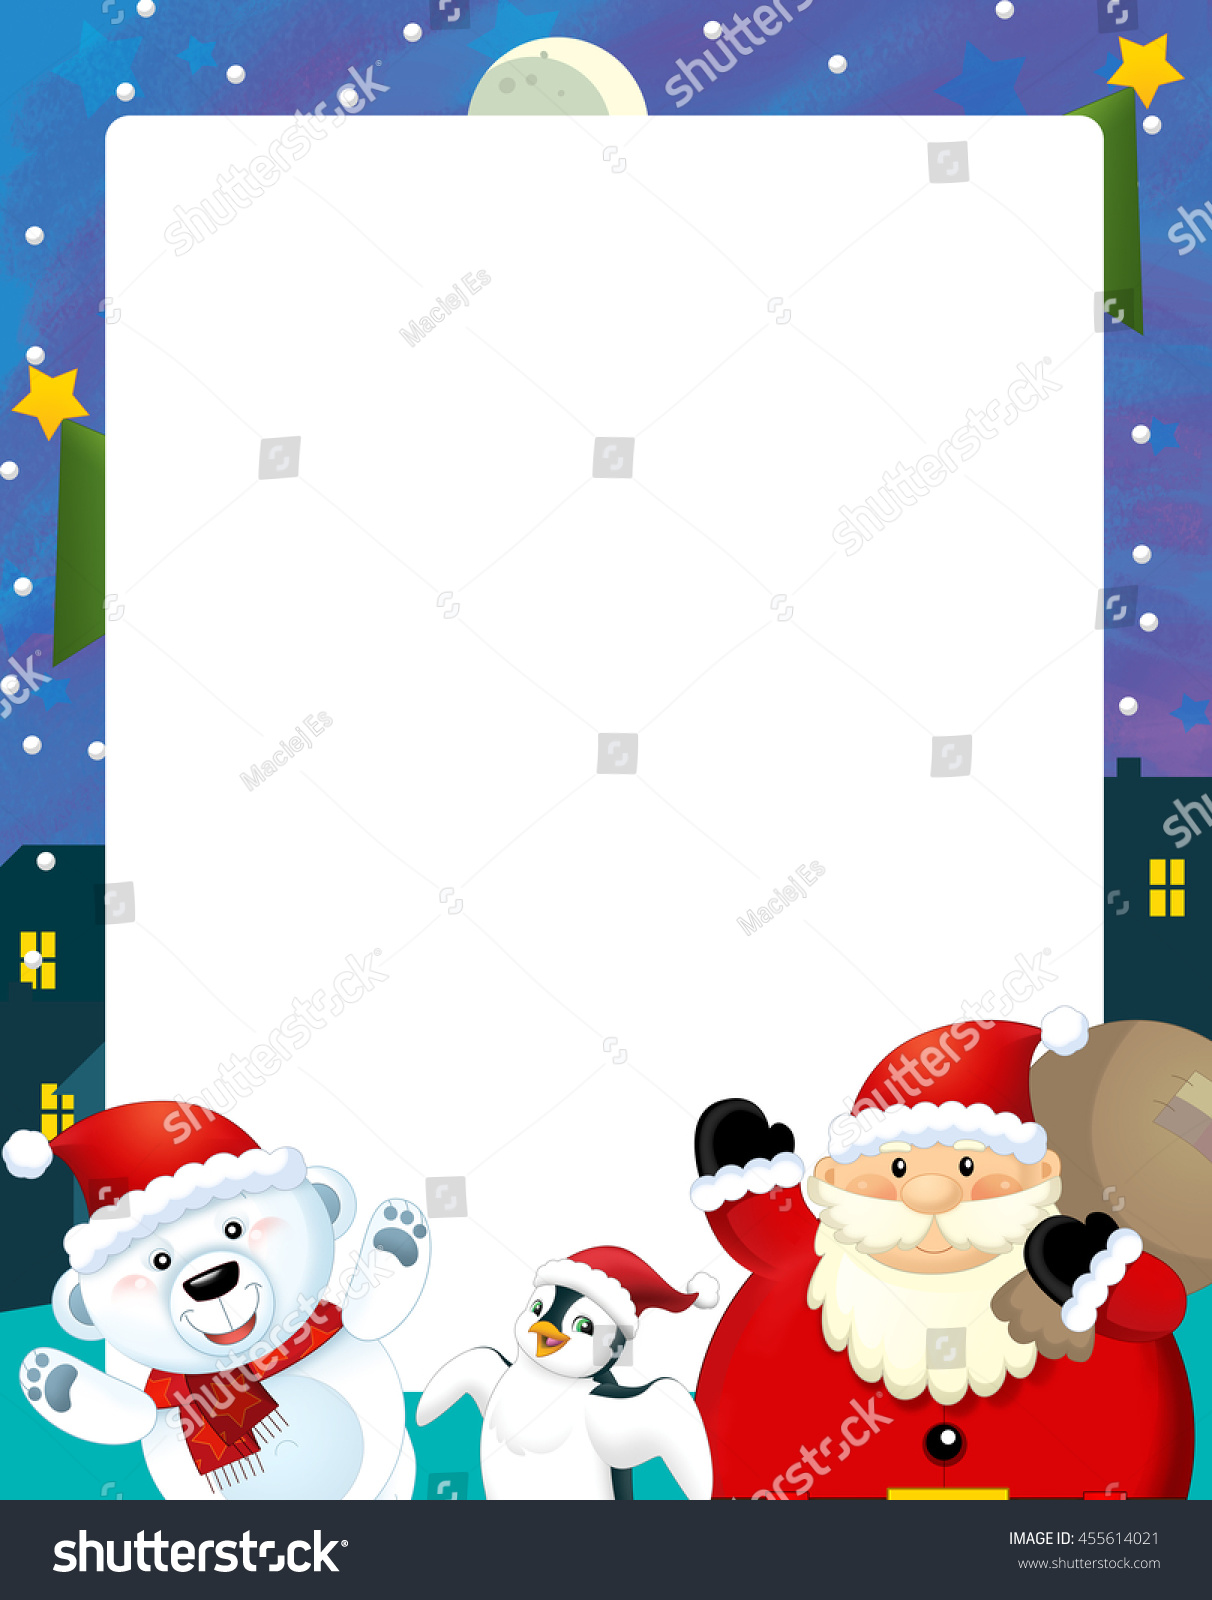 Cartoon Christmas Frame - Space For Text - Illustration For Children ...